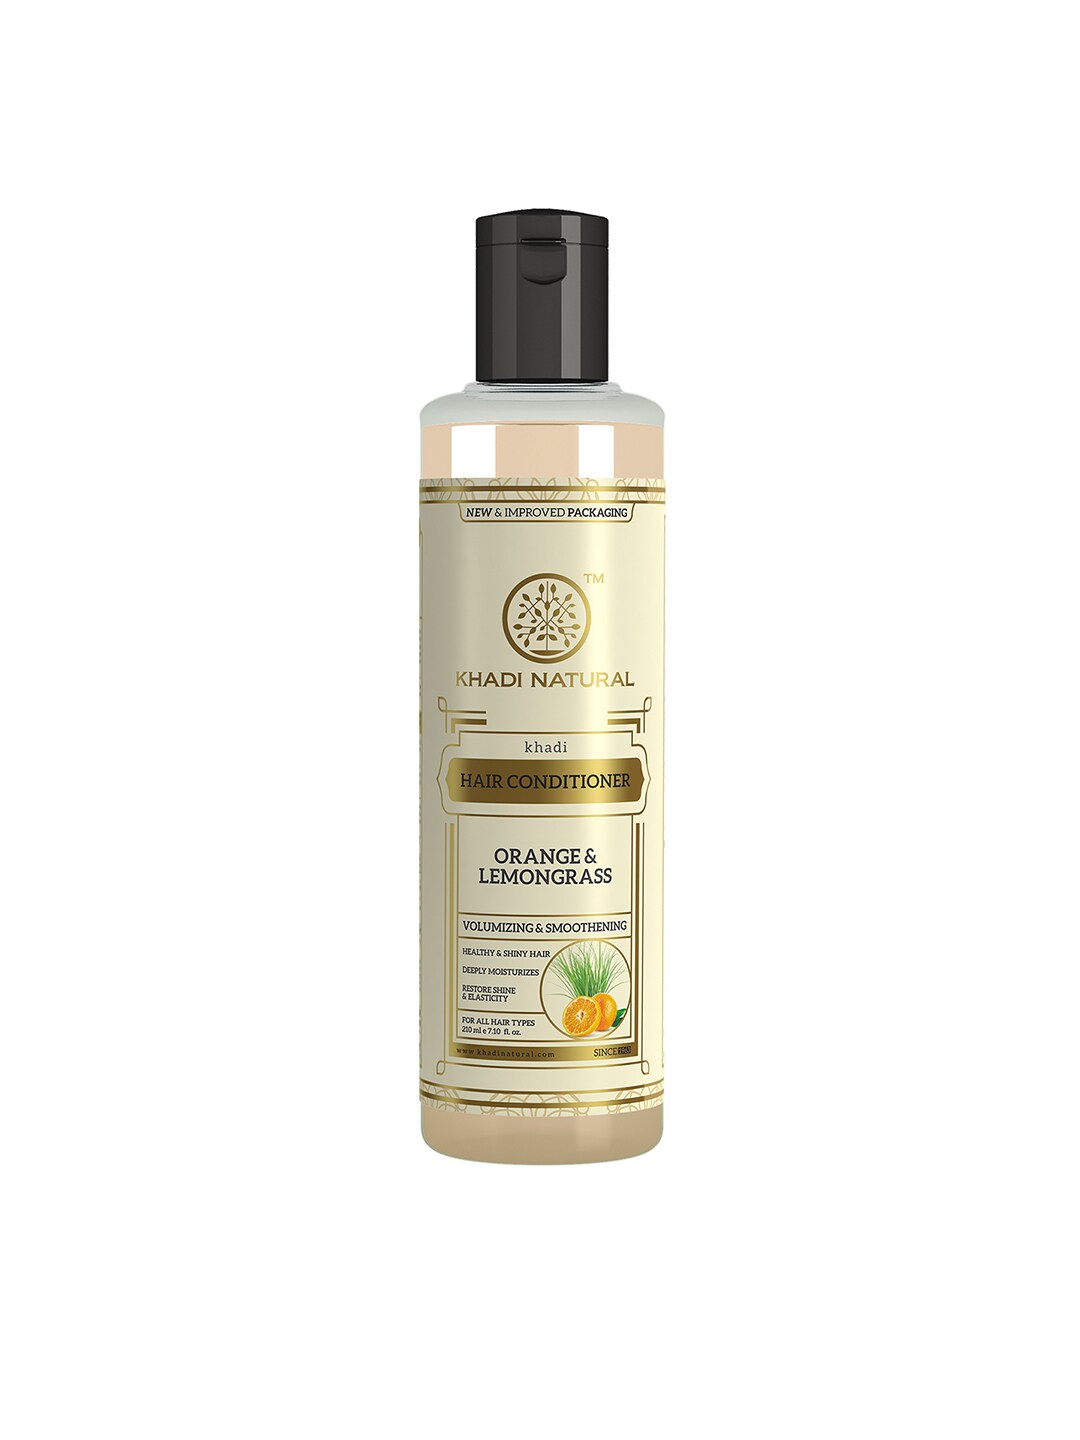 Khadi Natural Orange & Lemongrass Herbal Hair Conditioner 210 ml Price in India